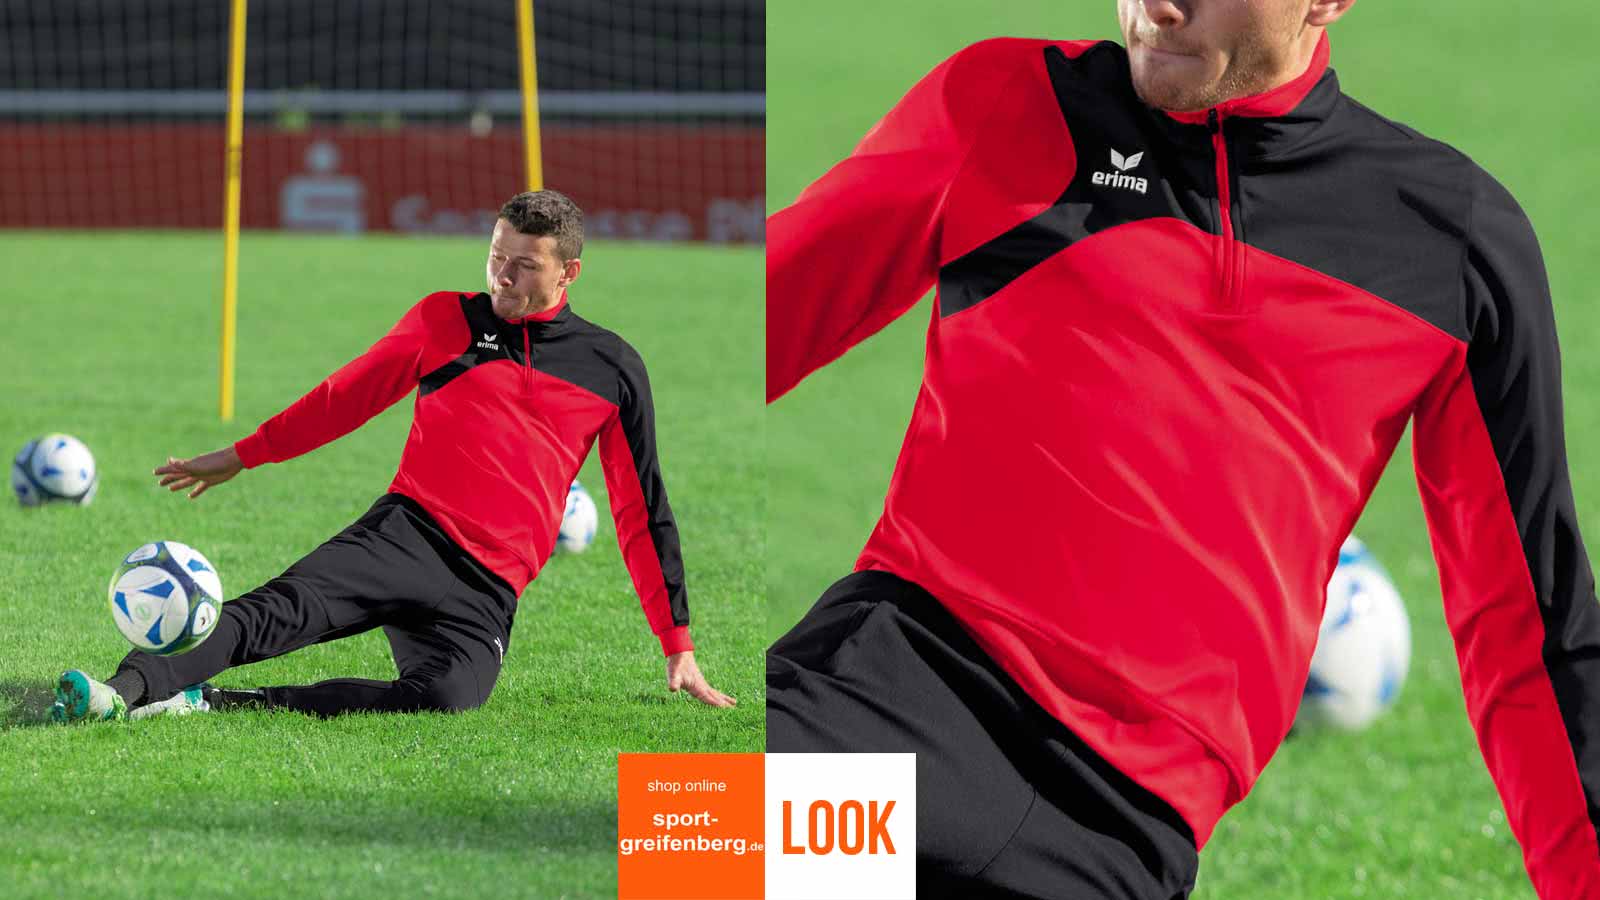 Das Erima Fußball Training Outfit mit rotem Training Top